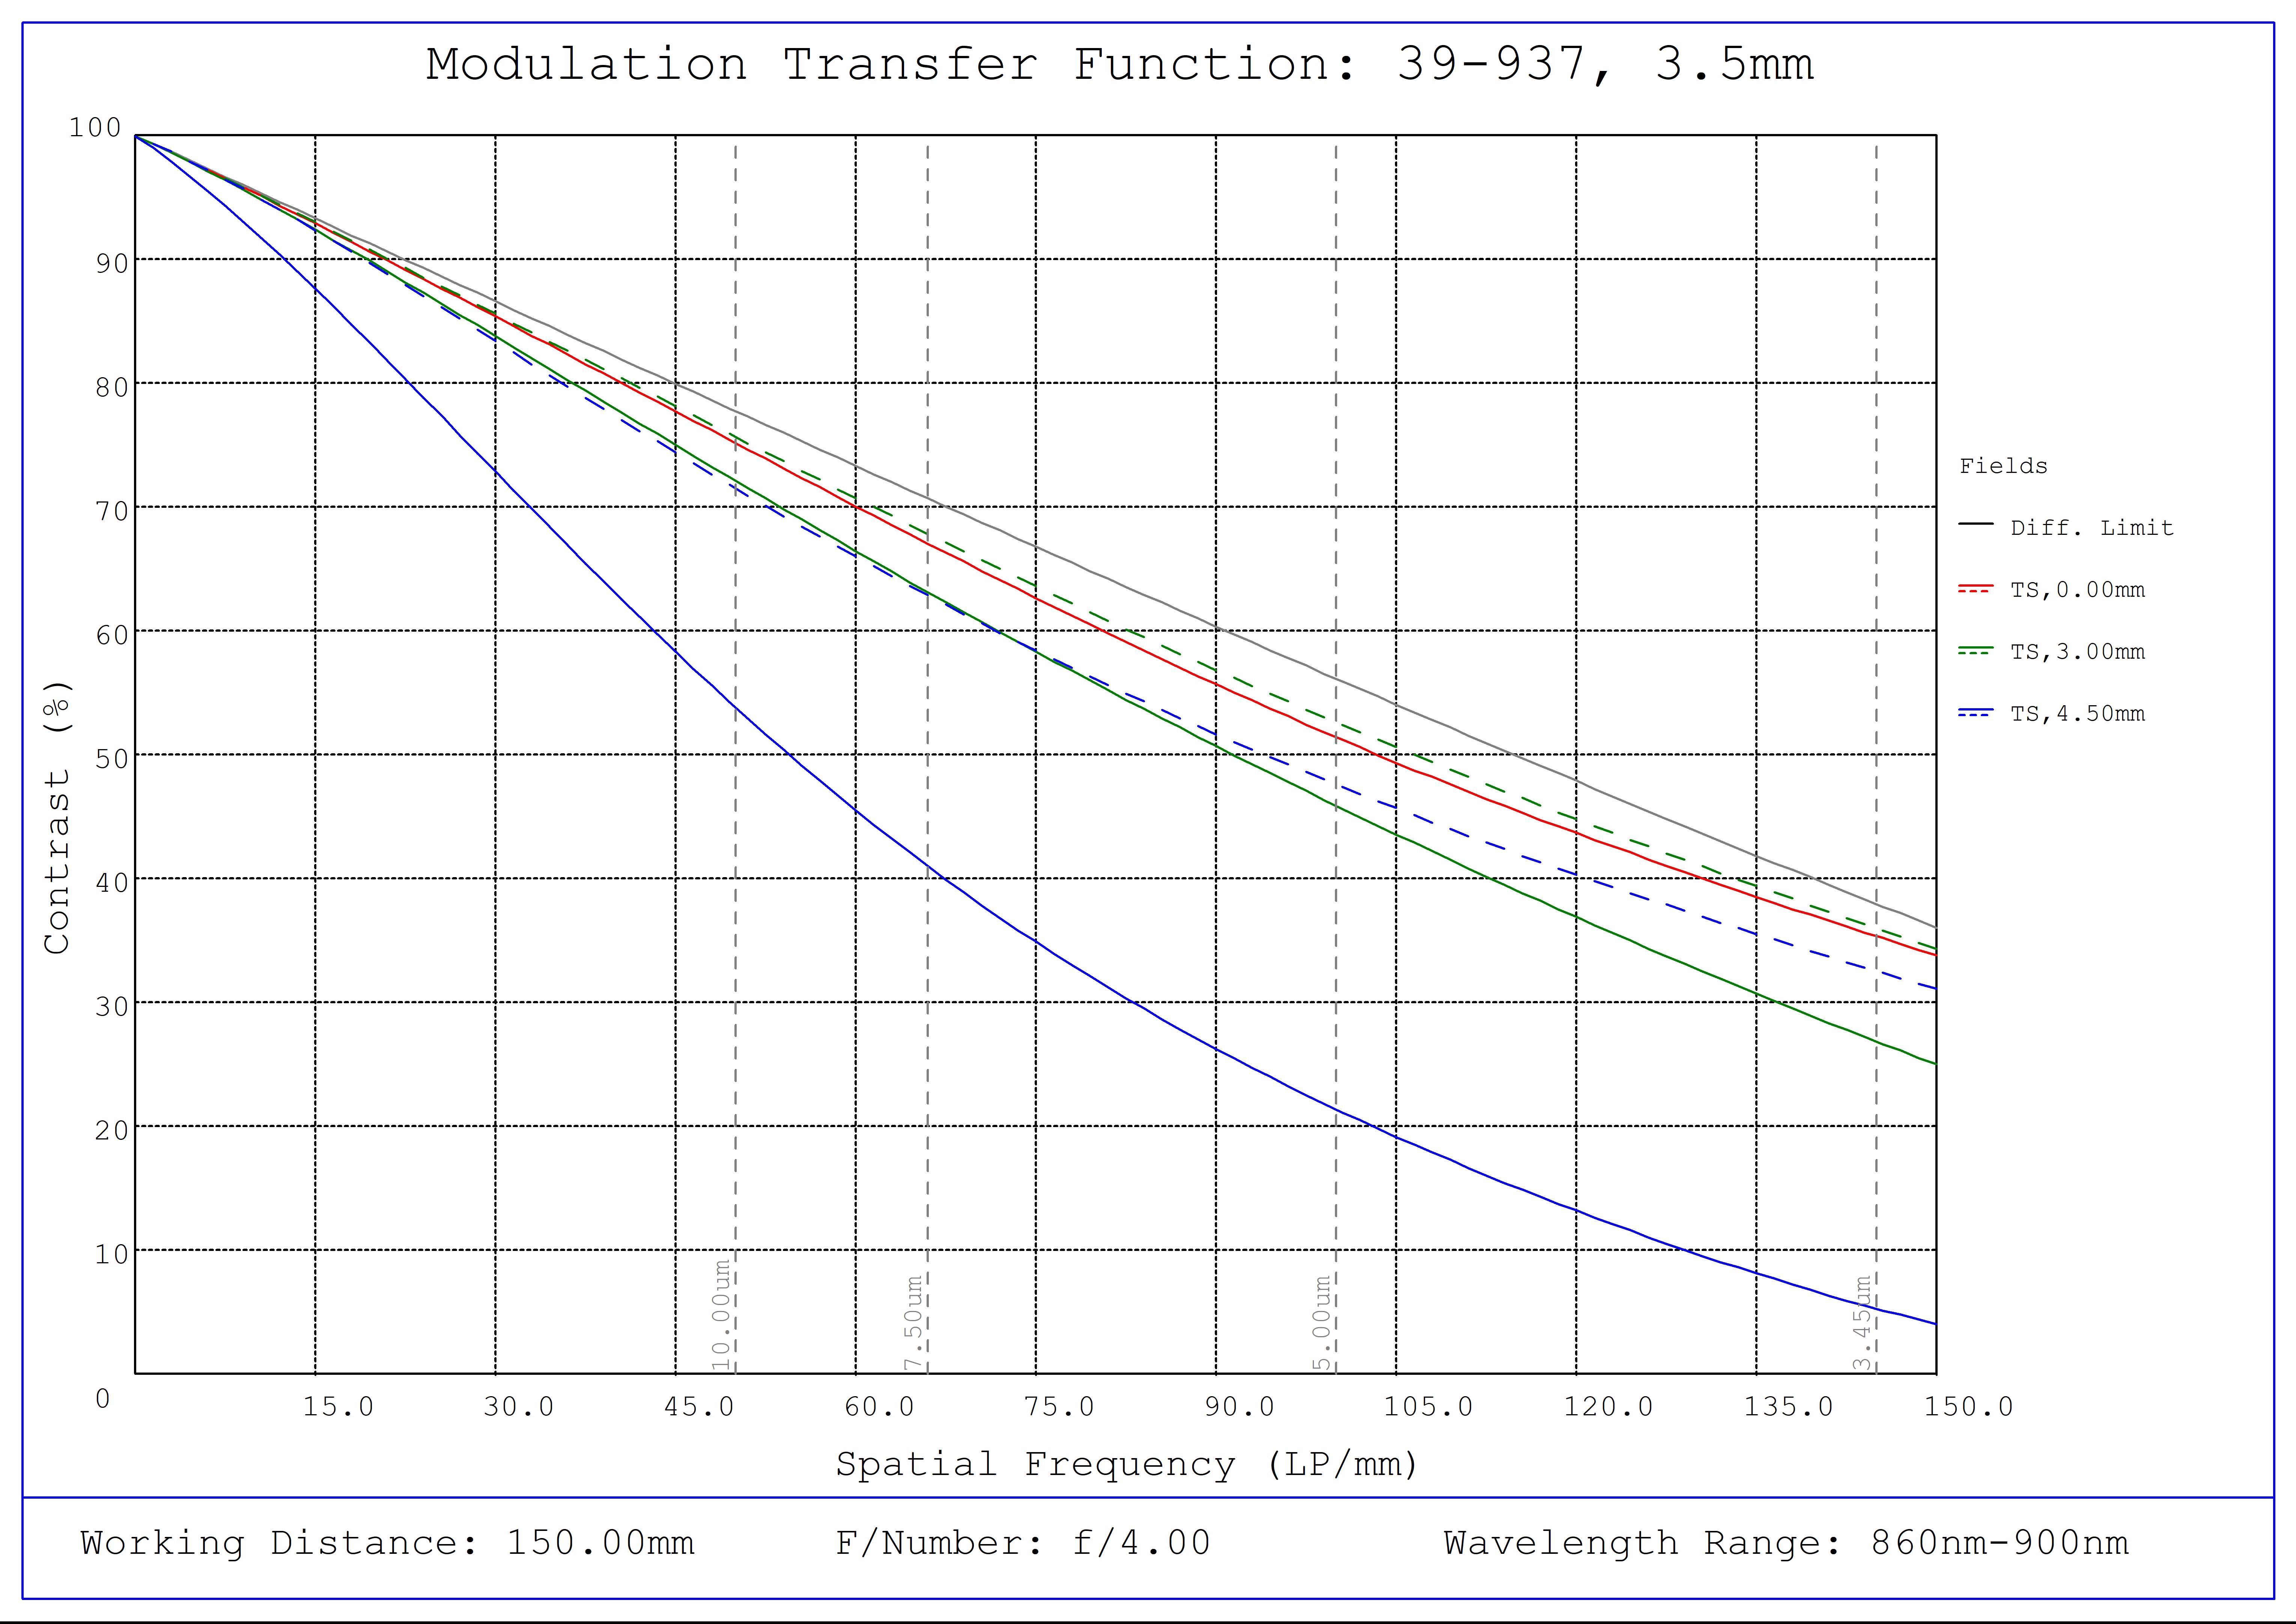 #39-937, 3.5mm C VIS-NIR Series Fixed Focal Length Lens, Modulated Transfer Function (MTF) Plot (NIR), 150mm Working Distance, f4